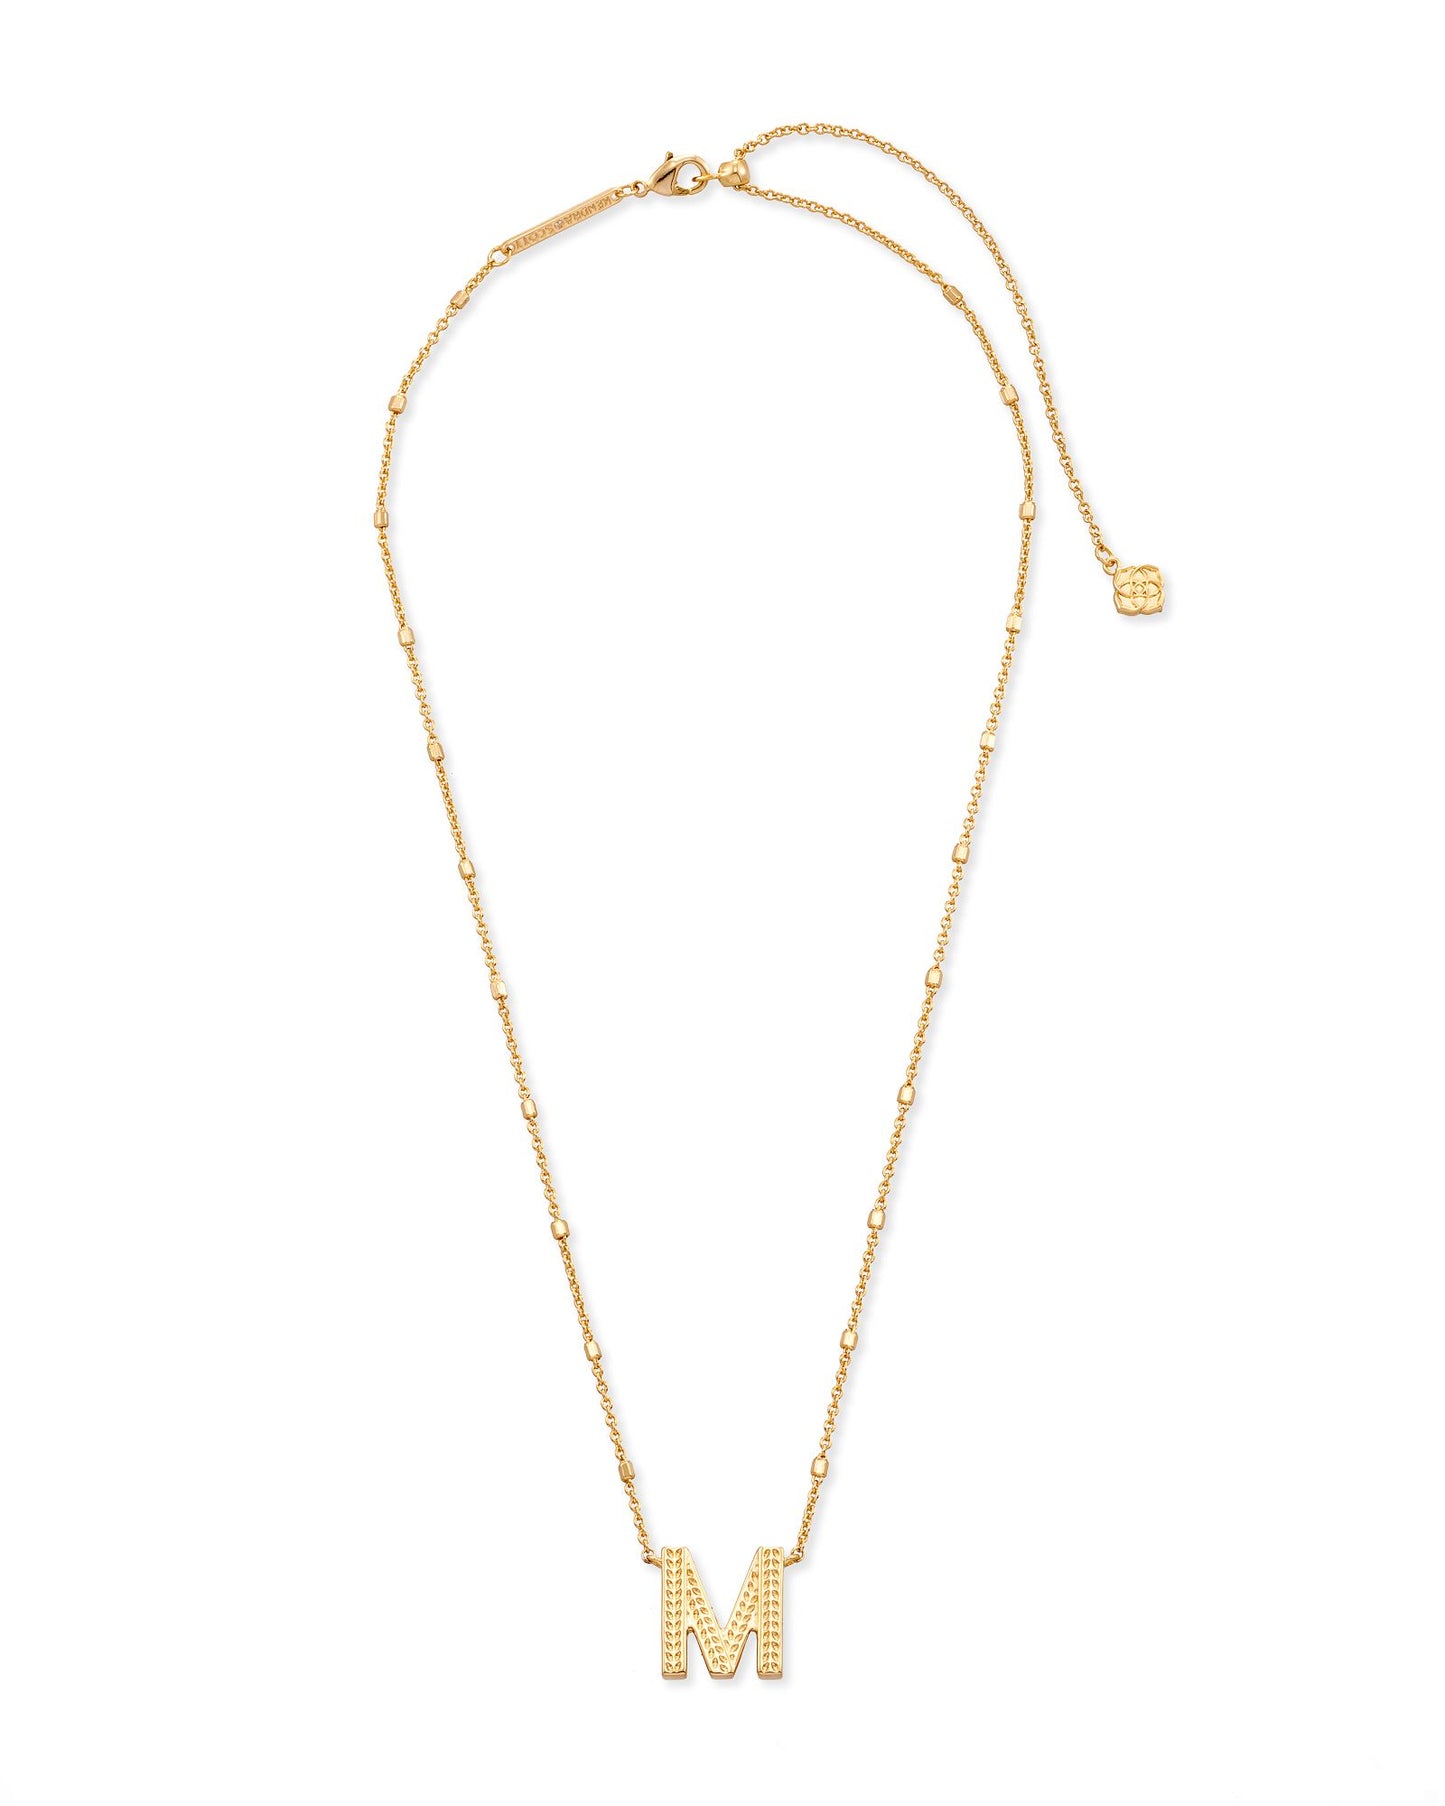 Kendra Scott Letter M Pendant Necklace Gold Metal-Necklaces-Kendra Scott-N1722GLD-M-The Twisted Chandelier